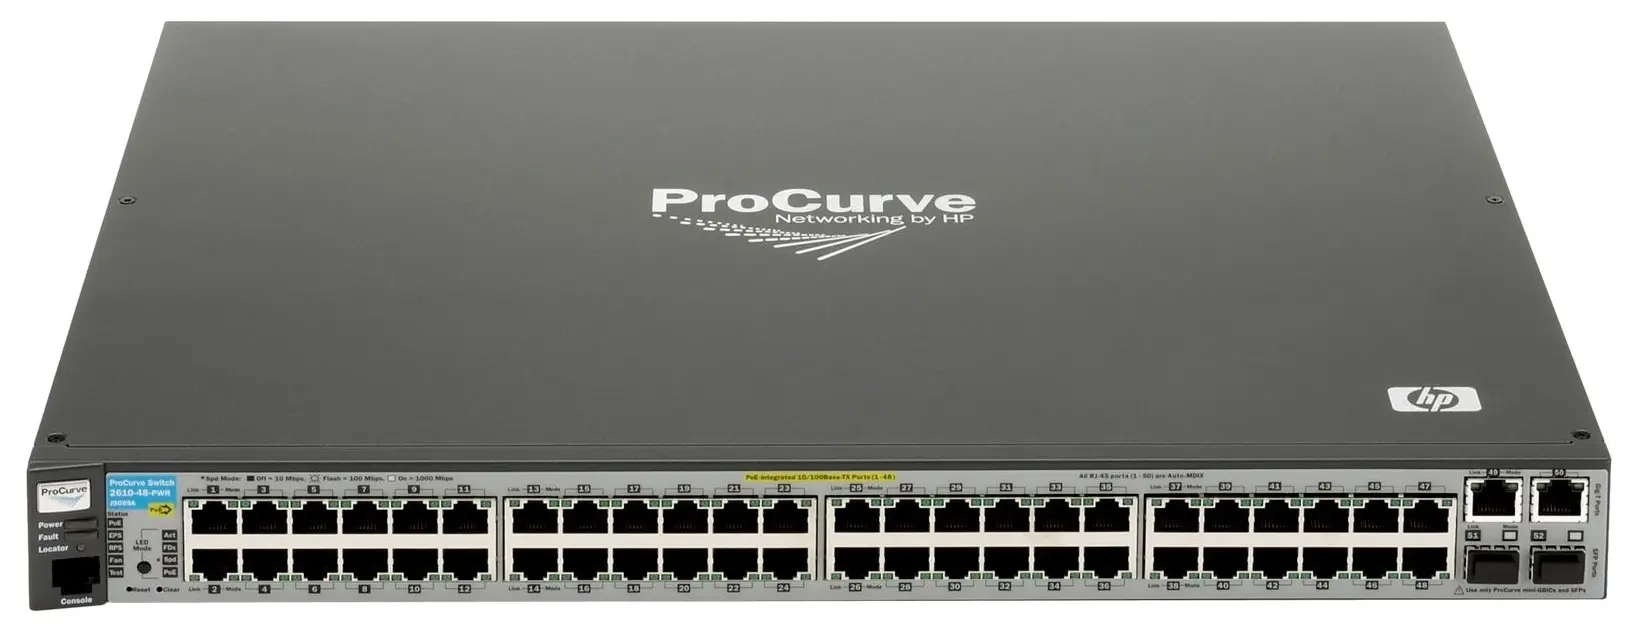 J9088-60001 HP ProCurve E2610-48 48-Ports Fast Ethernet...